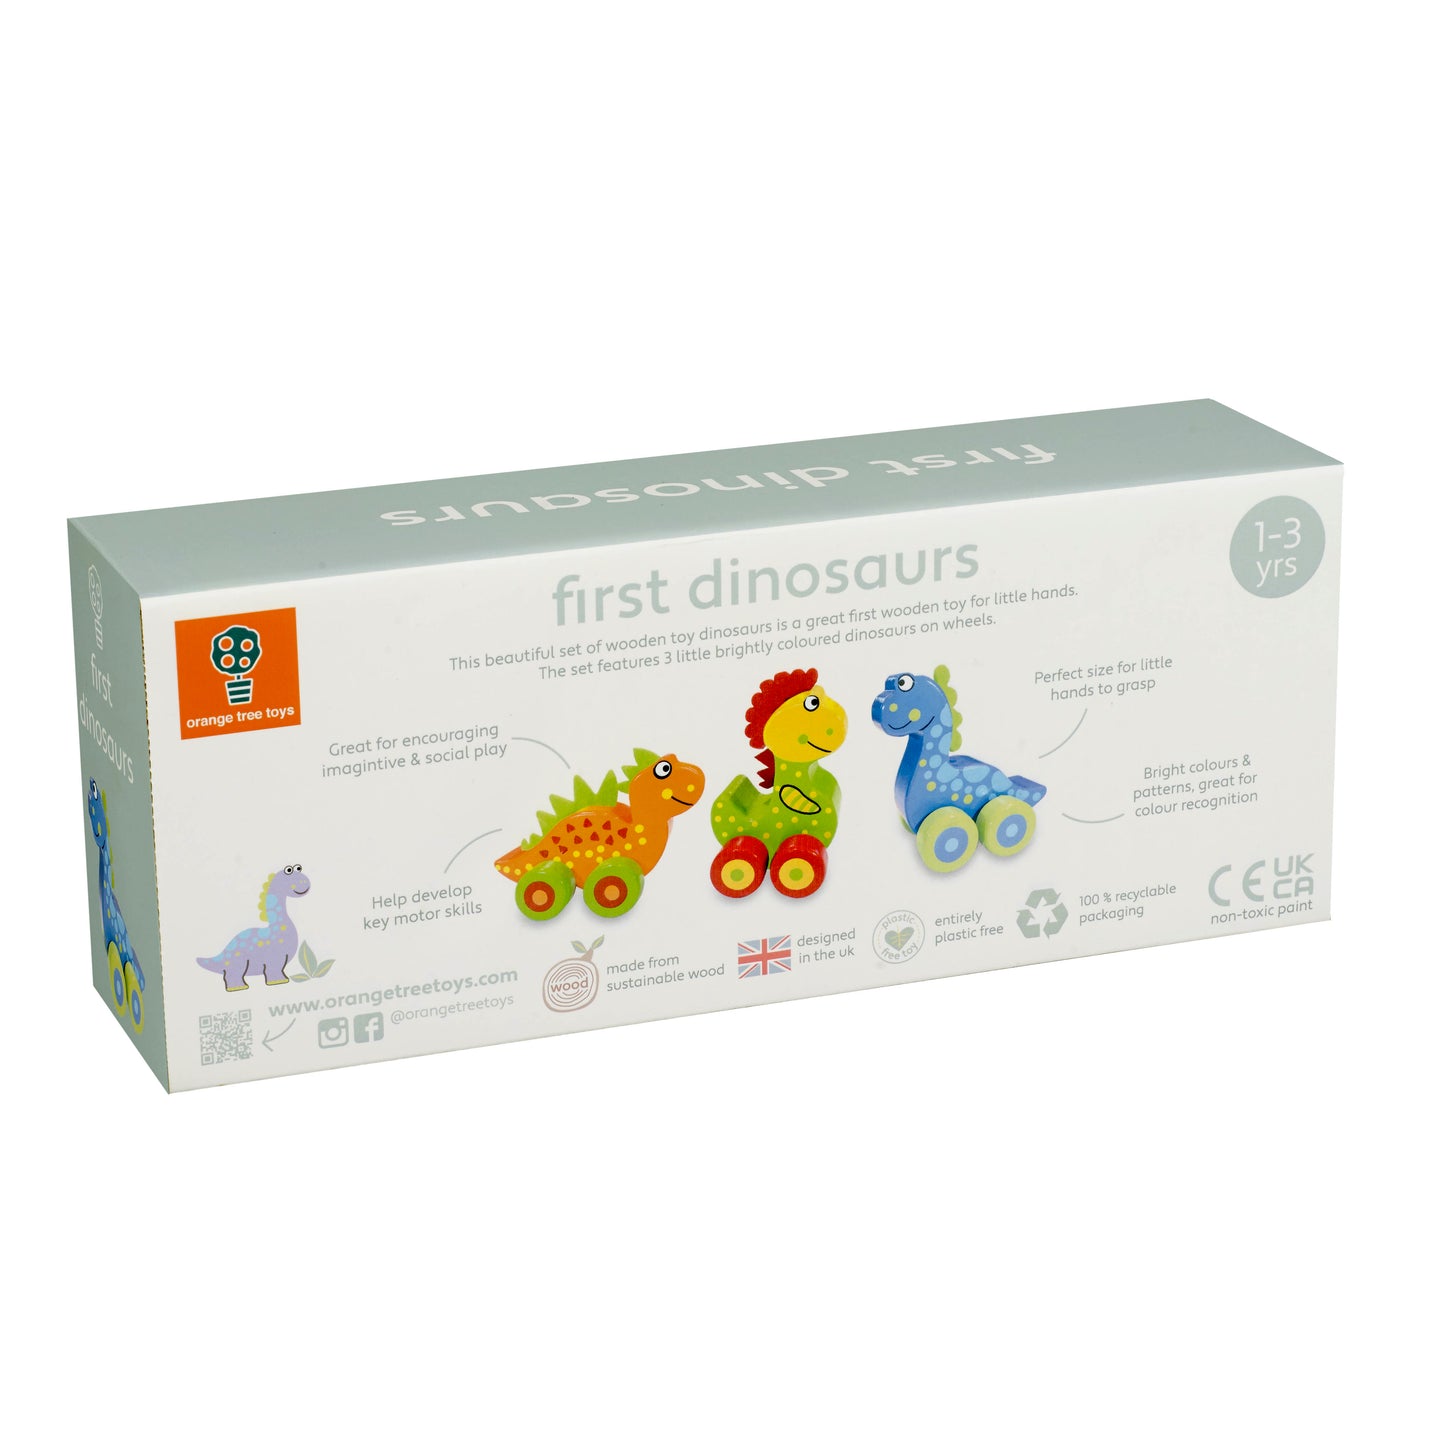 Orange Tree Toys First Dinosaurs